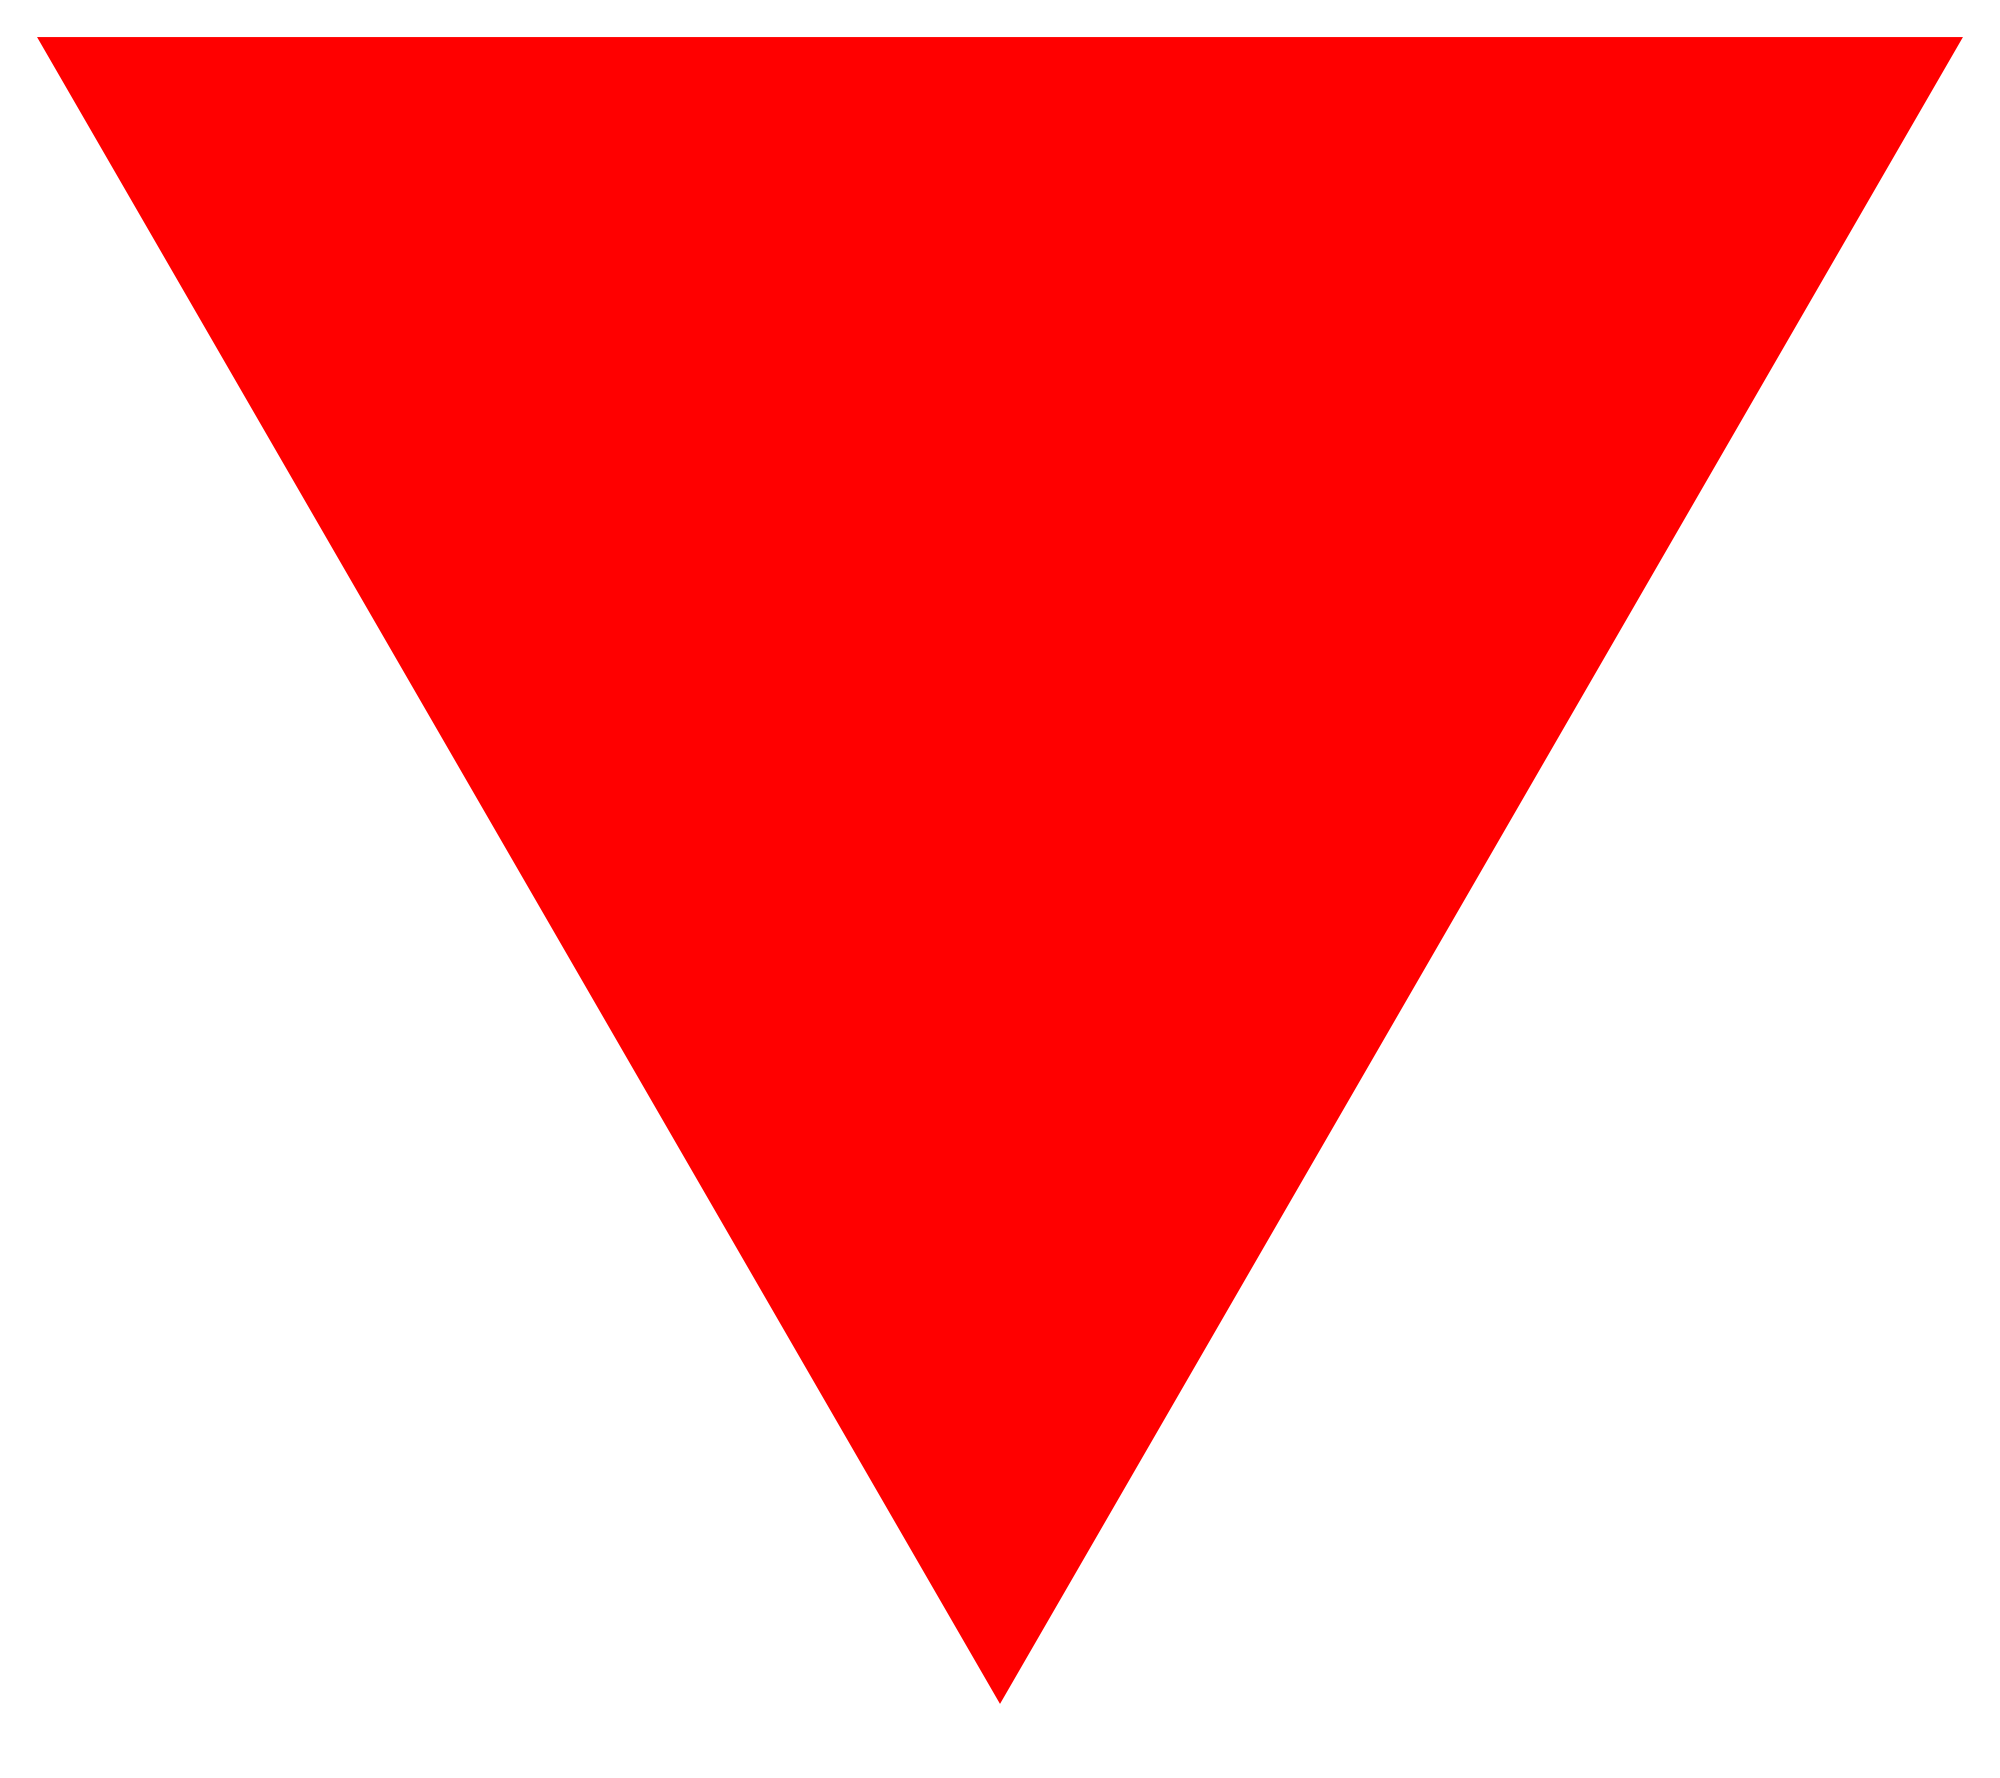 Triangular clipart upside down, Triangular upside down Transparent FREE ...